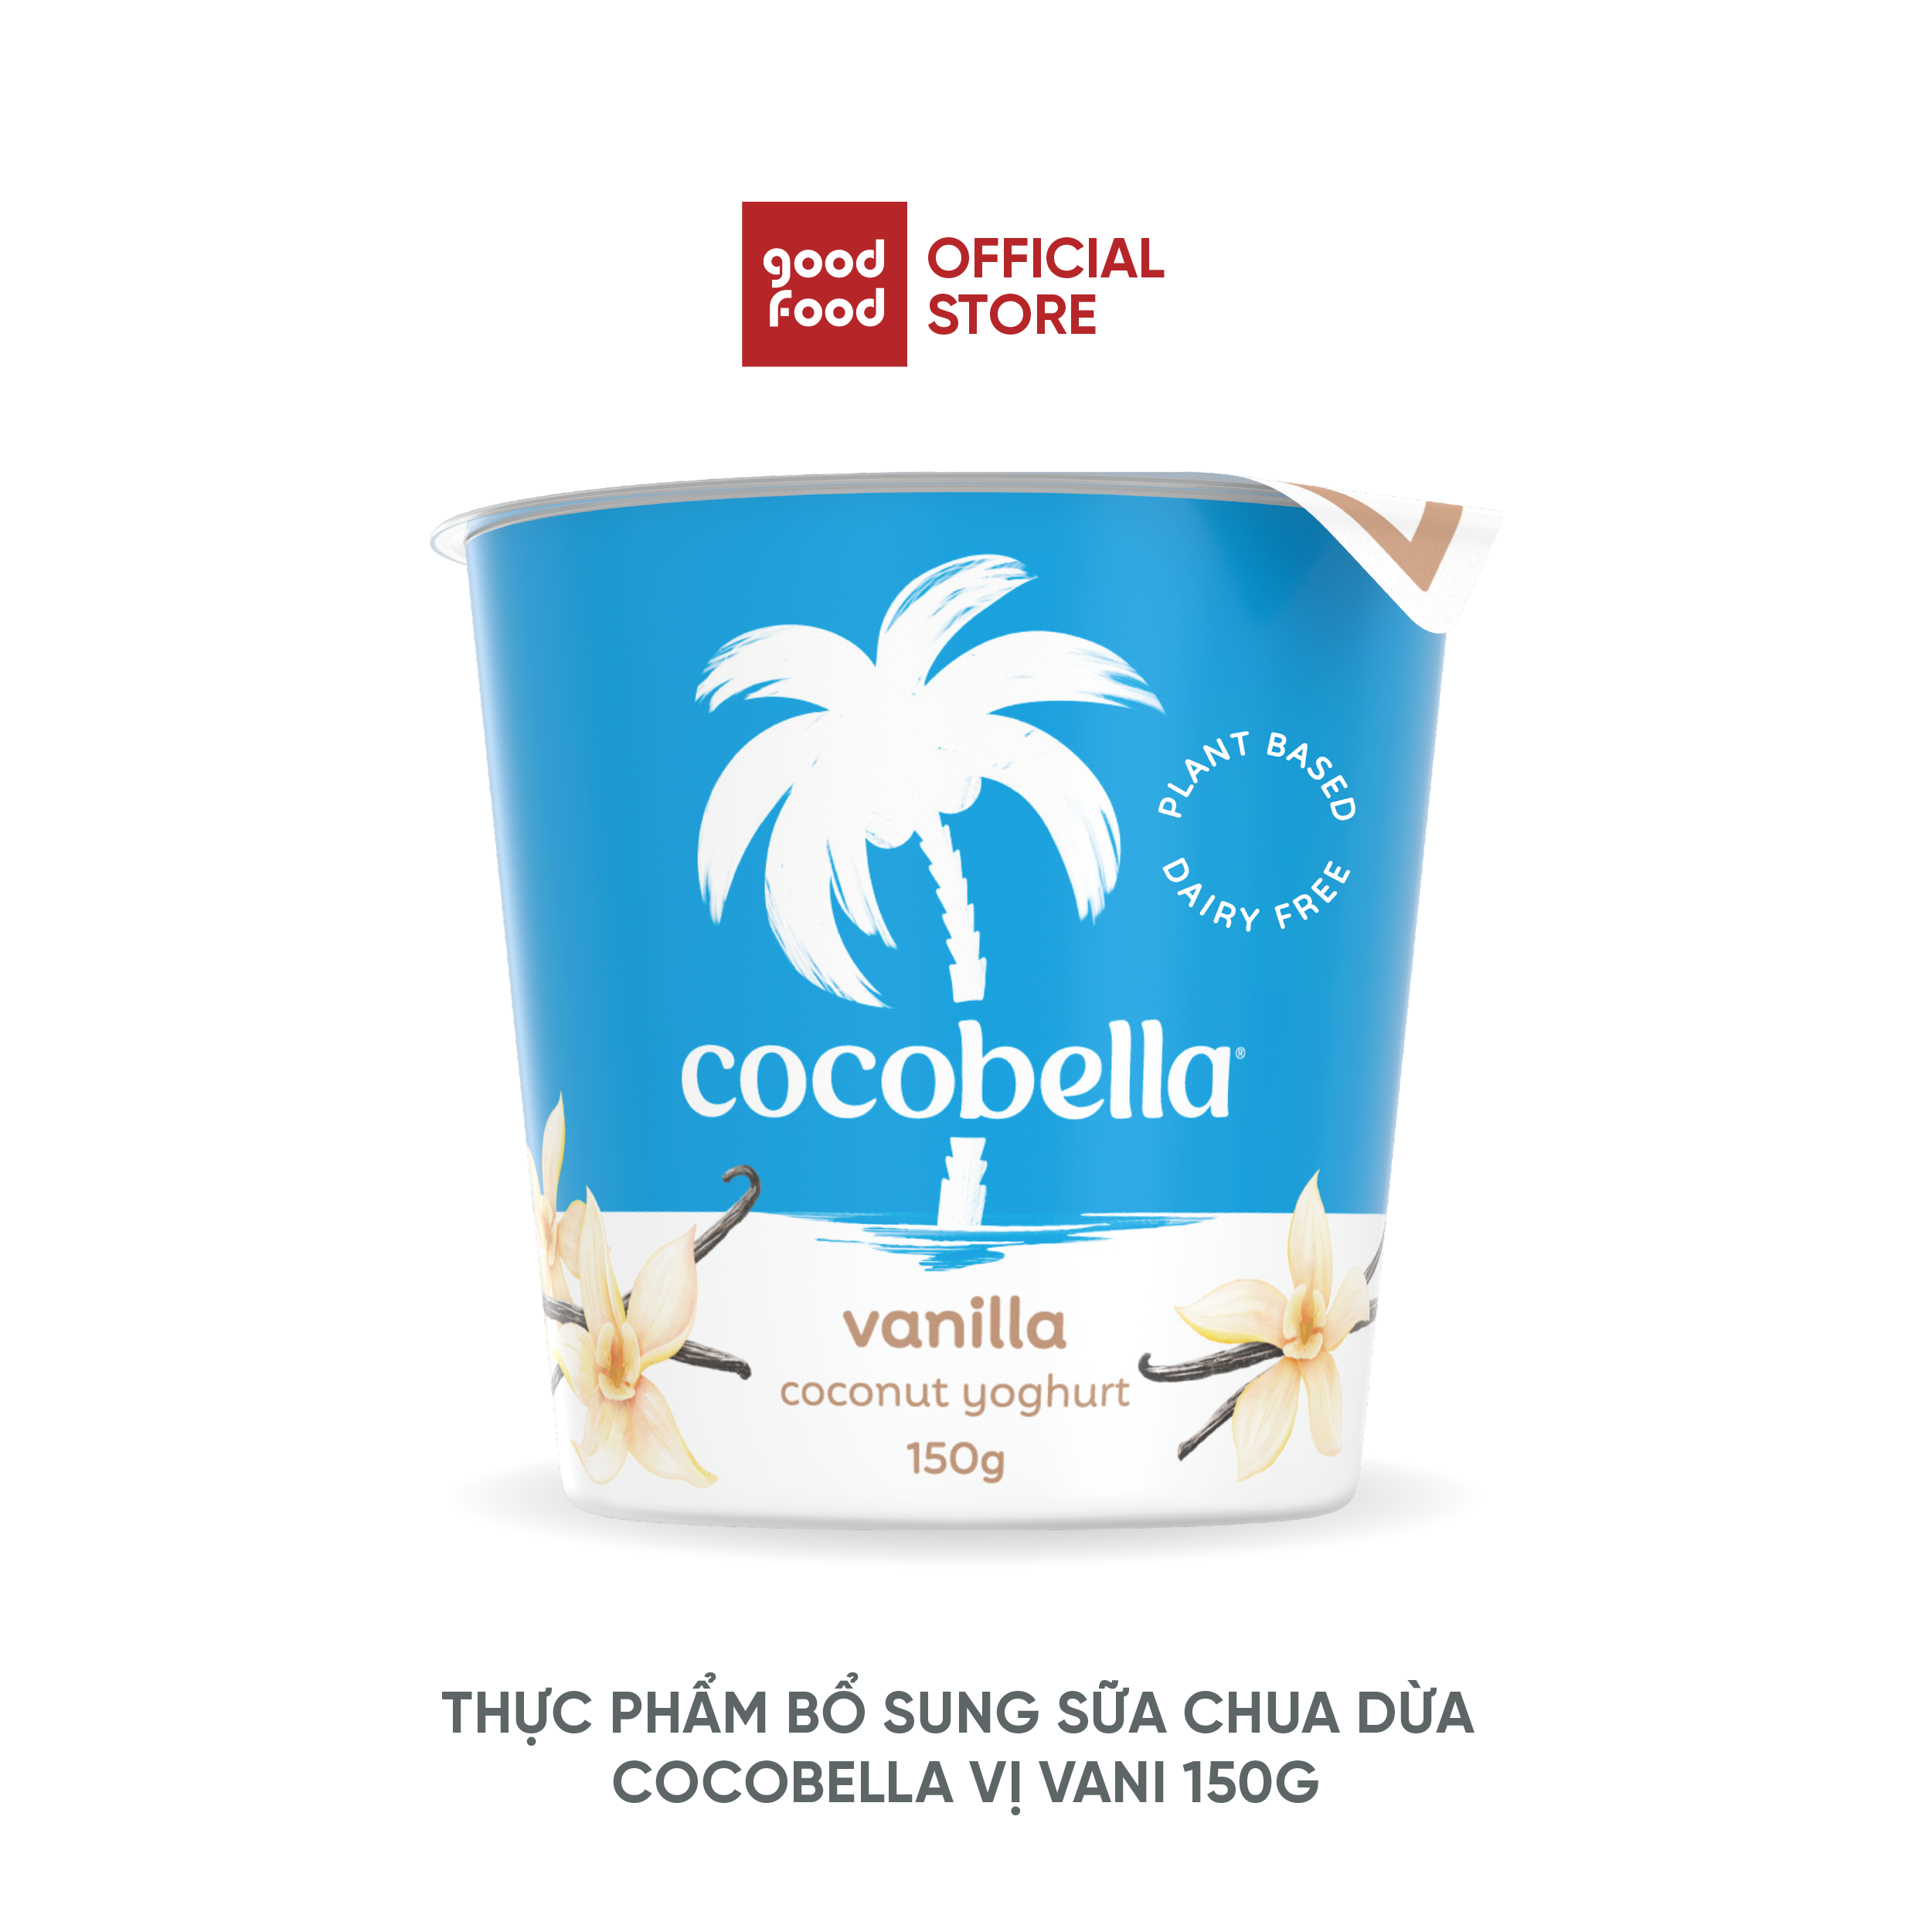 Thực Phẩm Bổ Sung Sữa Chua Dừa Cocobella vị vanilla 150G - 1 hũ